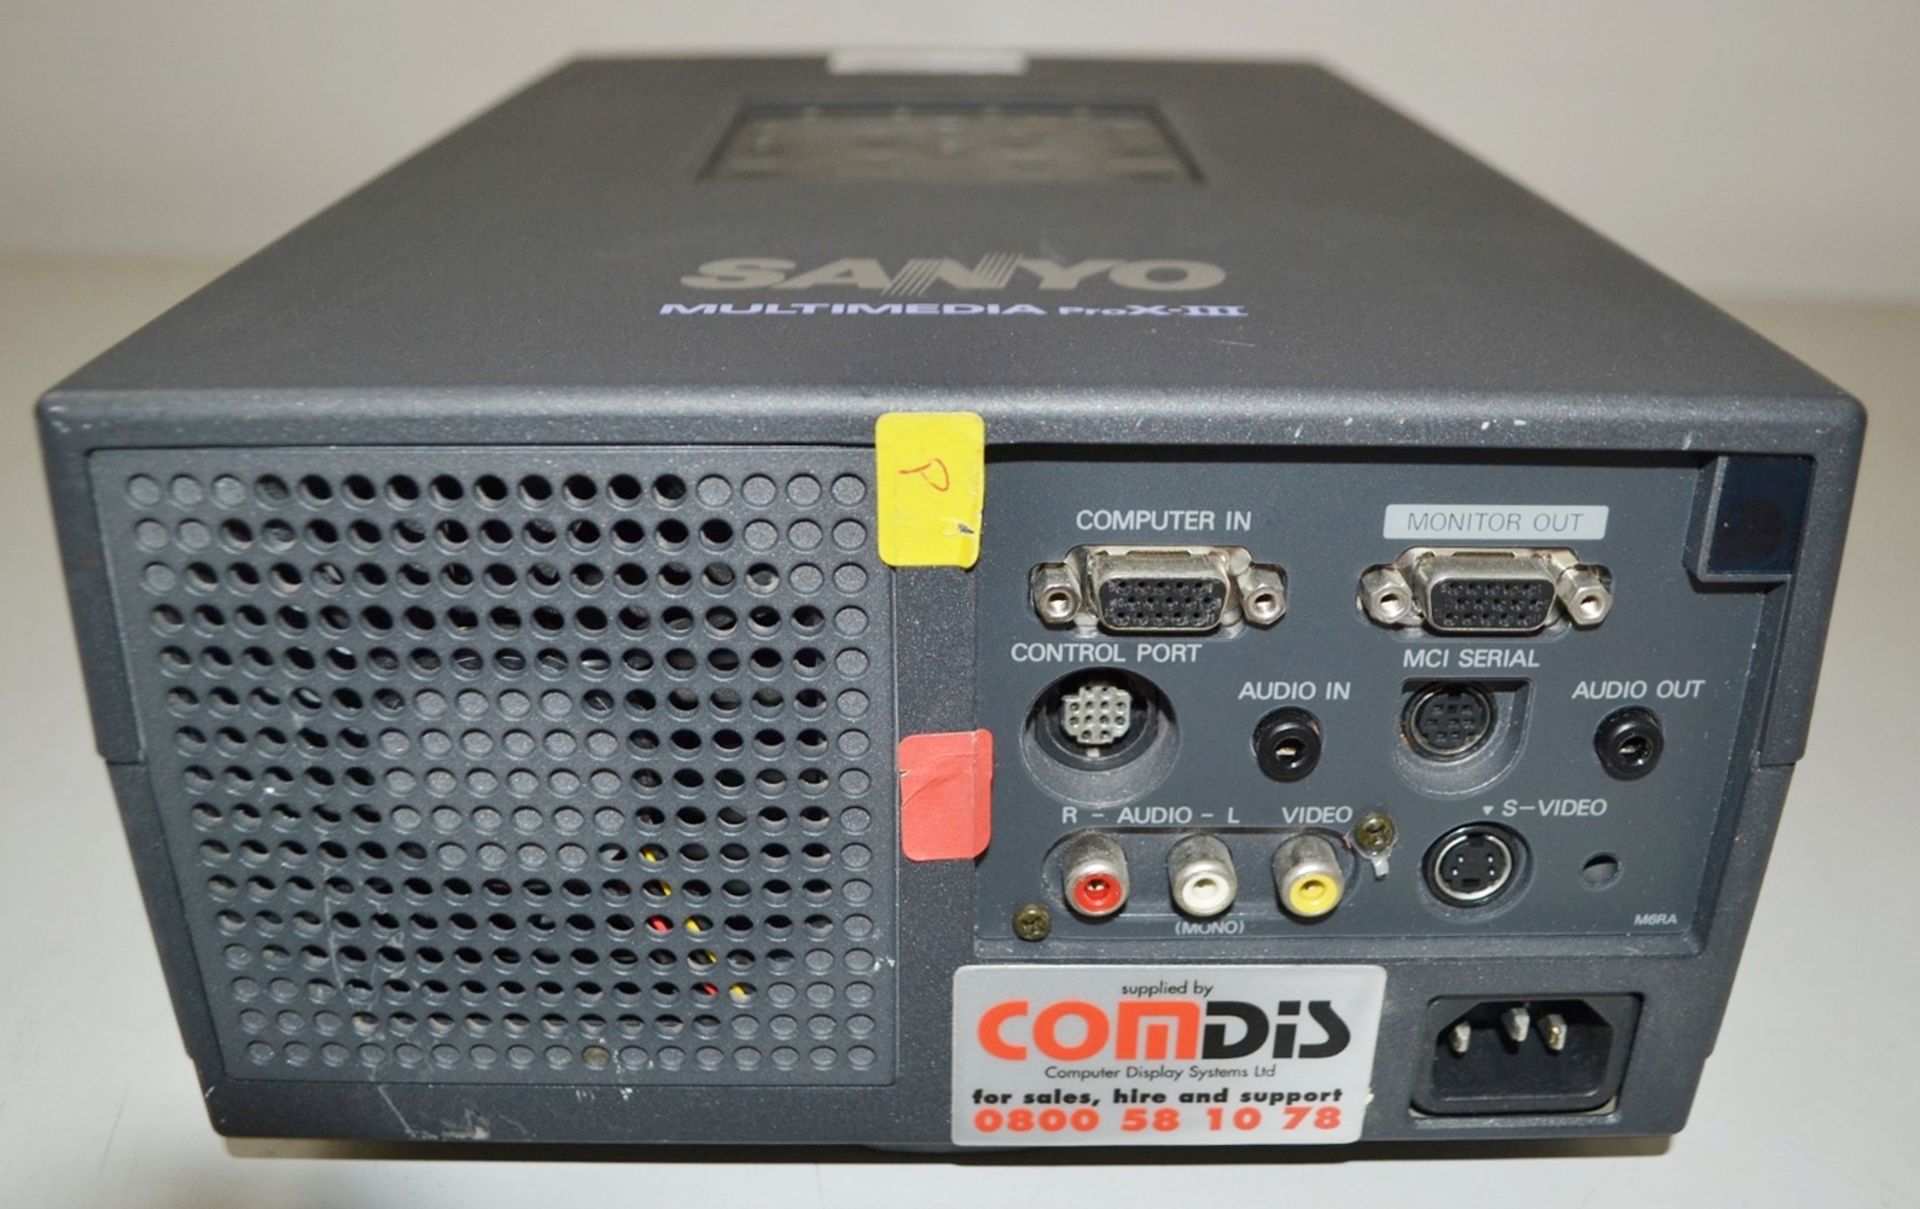 1 x Sanyo Multimedia Projector Pro X III - Ref: LD360 - CL409 - Altrincham WA14 - Image 3 of 5